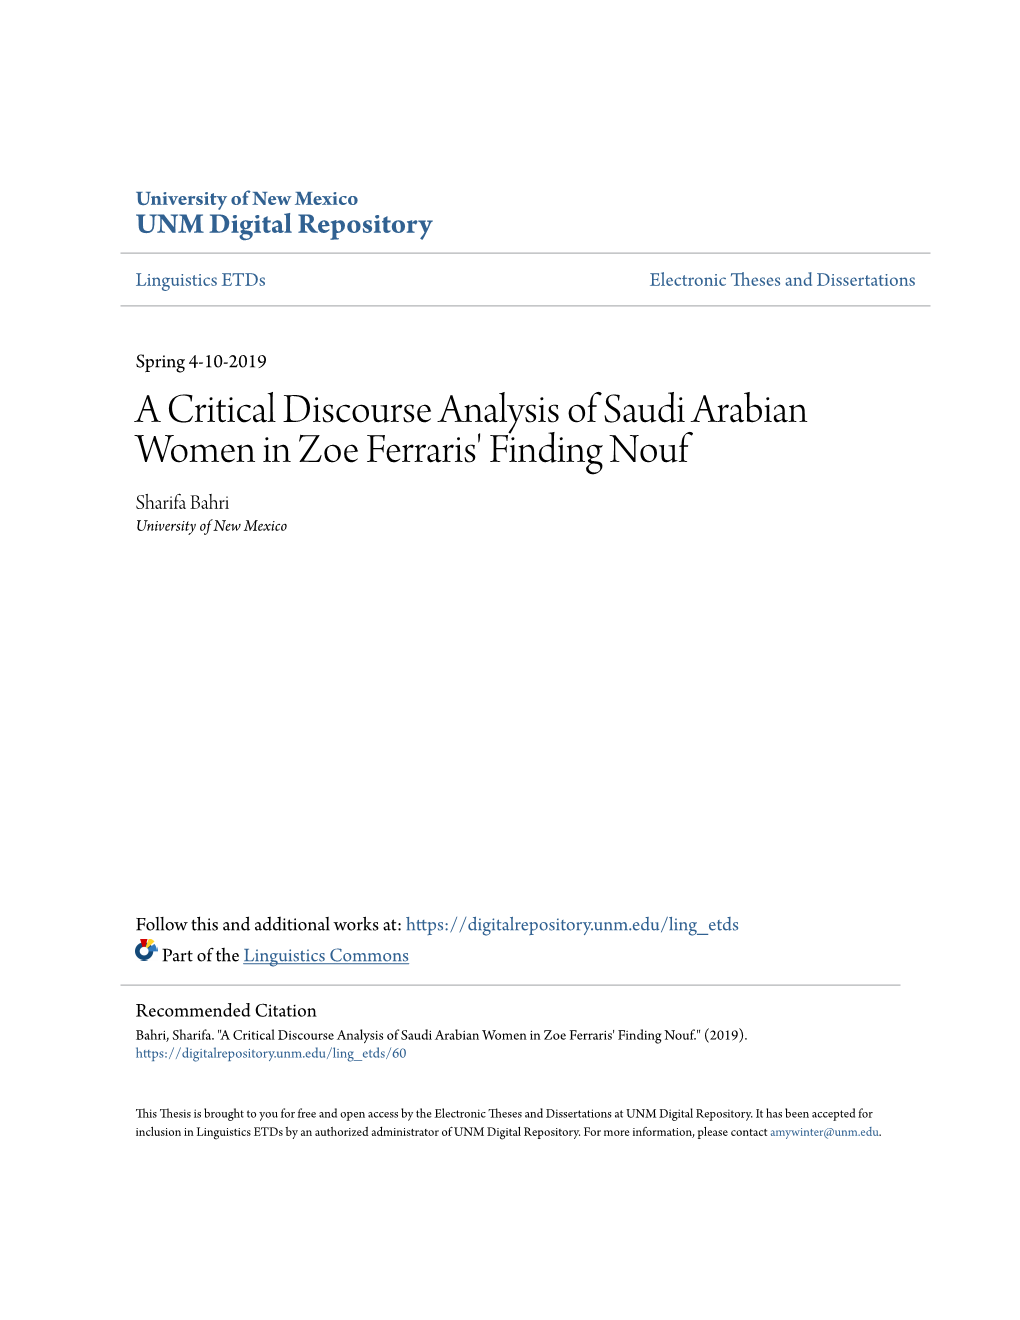 A Critical Discourse Analysis of Saudi Arabian Women in Zoe Ferraris' Finding Nouf Sharifa Bahri University of New Mexico